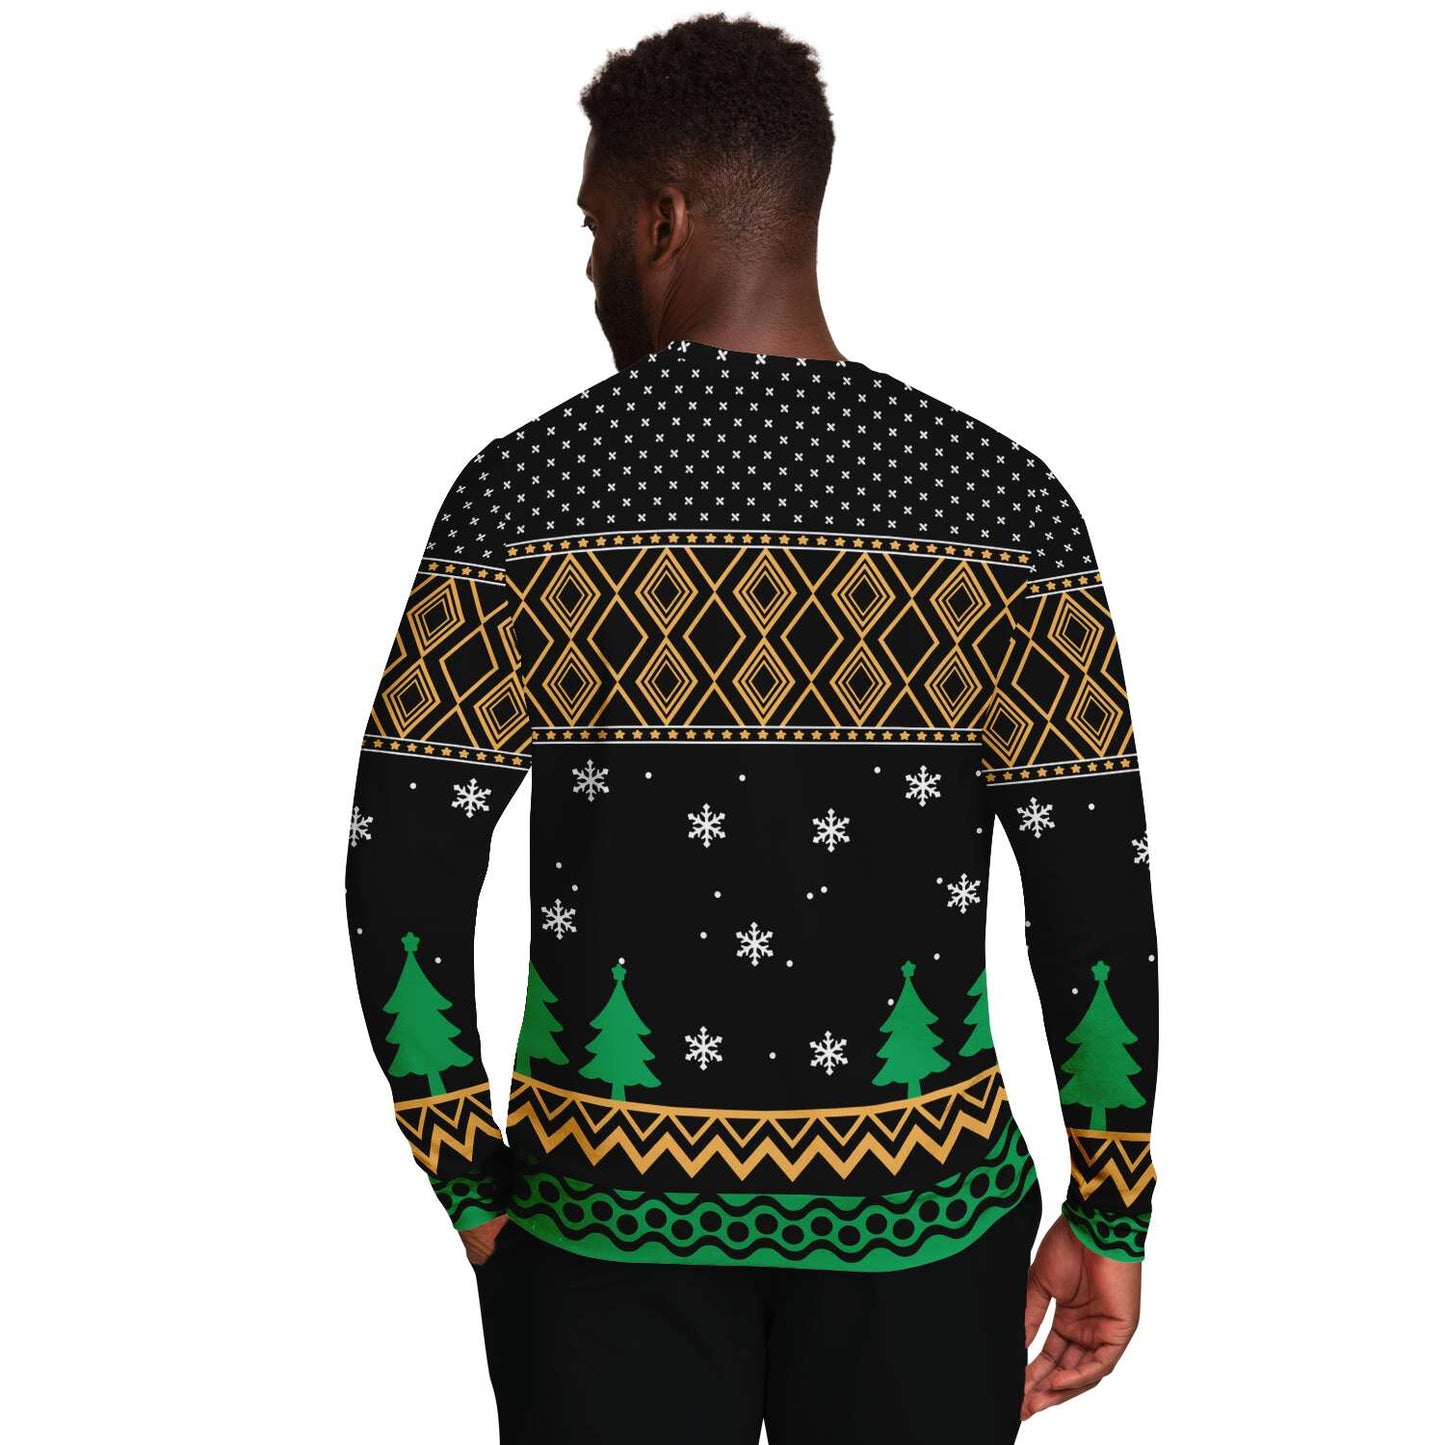 Happy Hoolidays Ugly Christmas Sweatshirt Fashion Sweatshirt - AOP Subliminator 